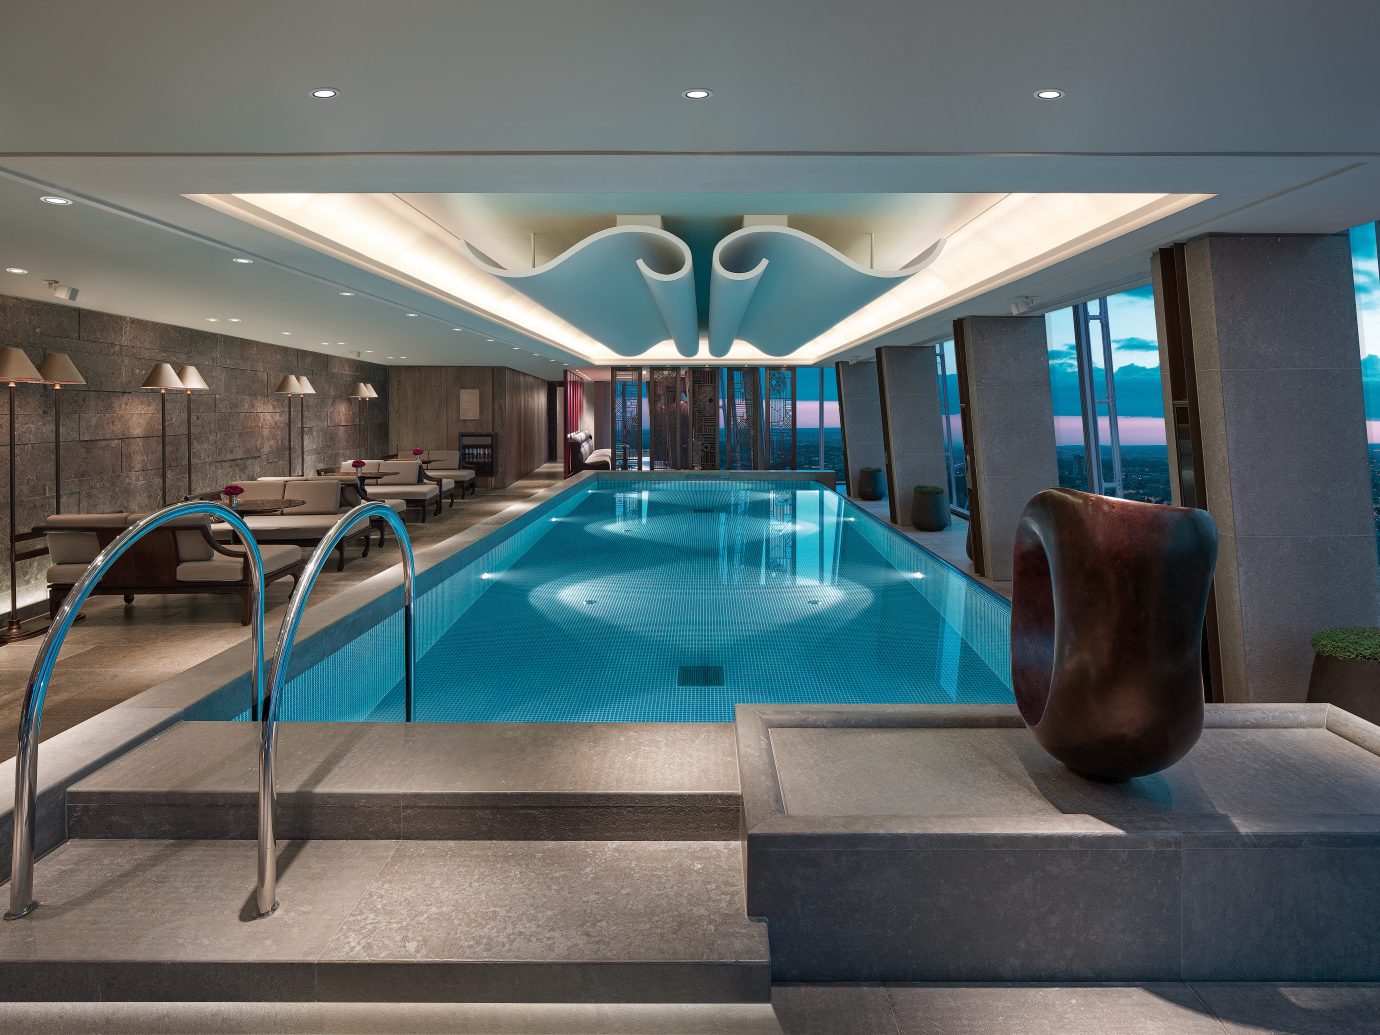 Infinity Pool At Shangri-La Hotel - The Shard In London